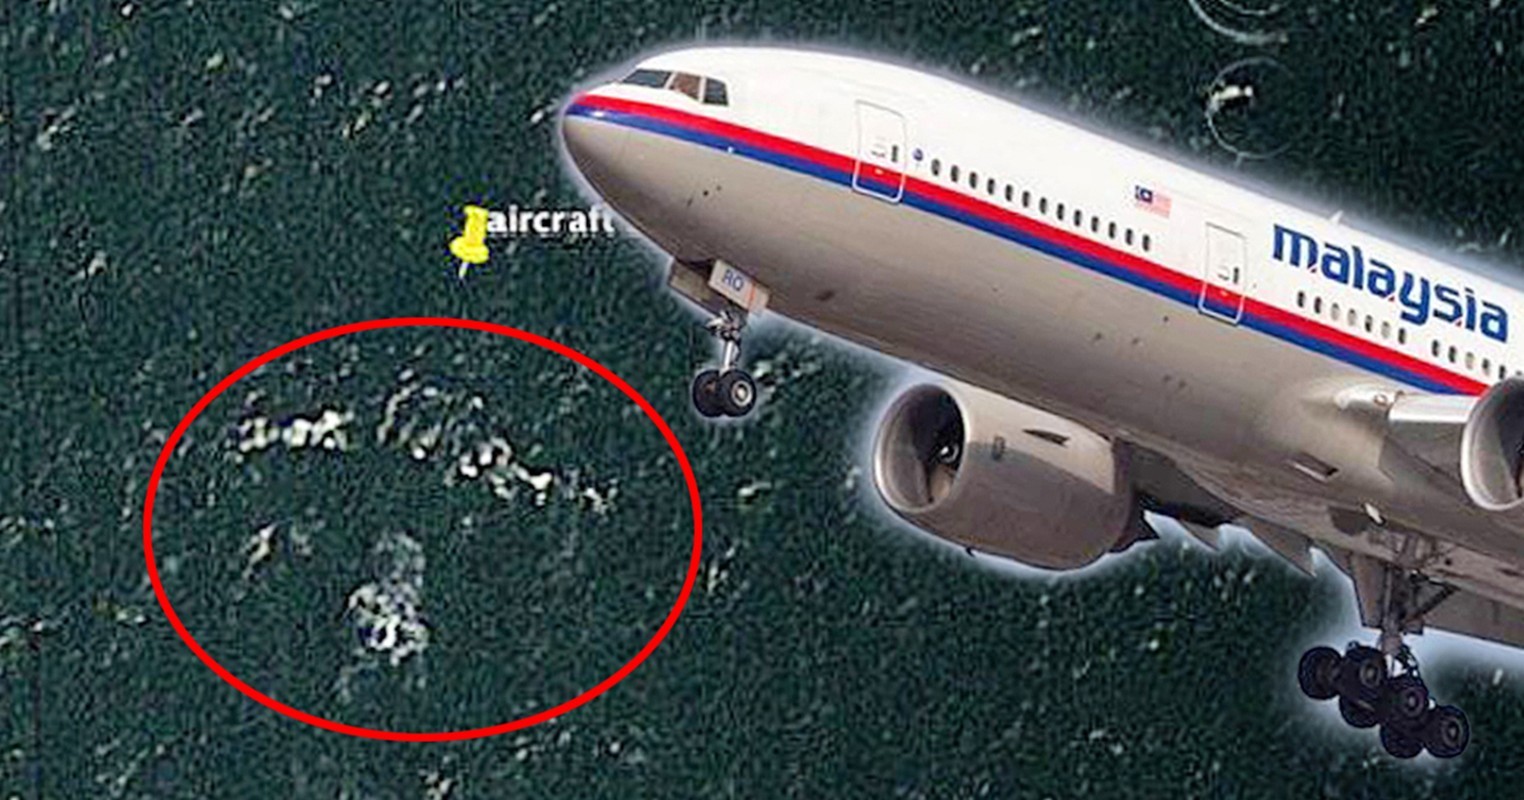 Tiet lo bat ngo “chia khoa” giup giai ma bi an may bay MH370-Hinh-6